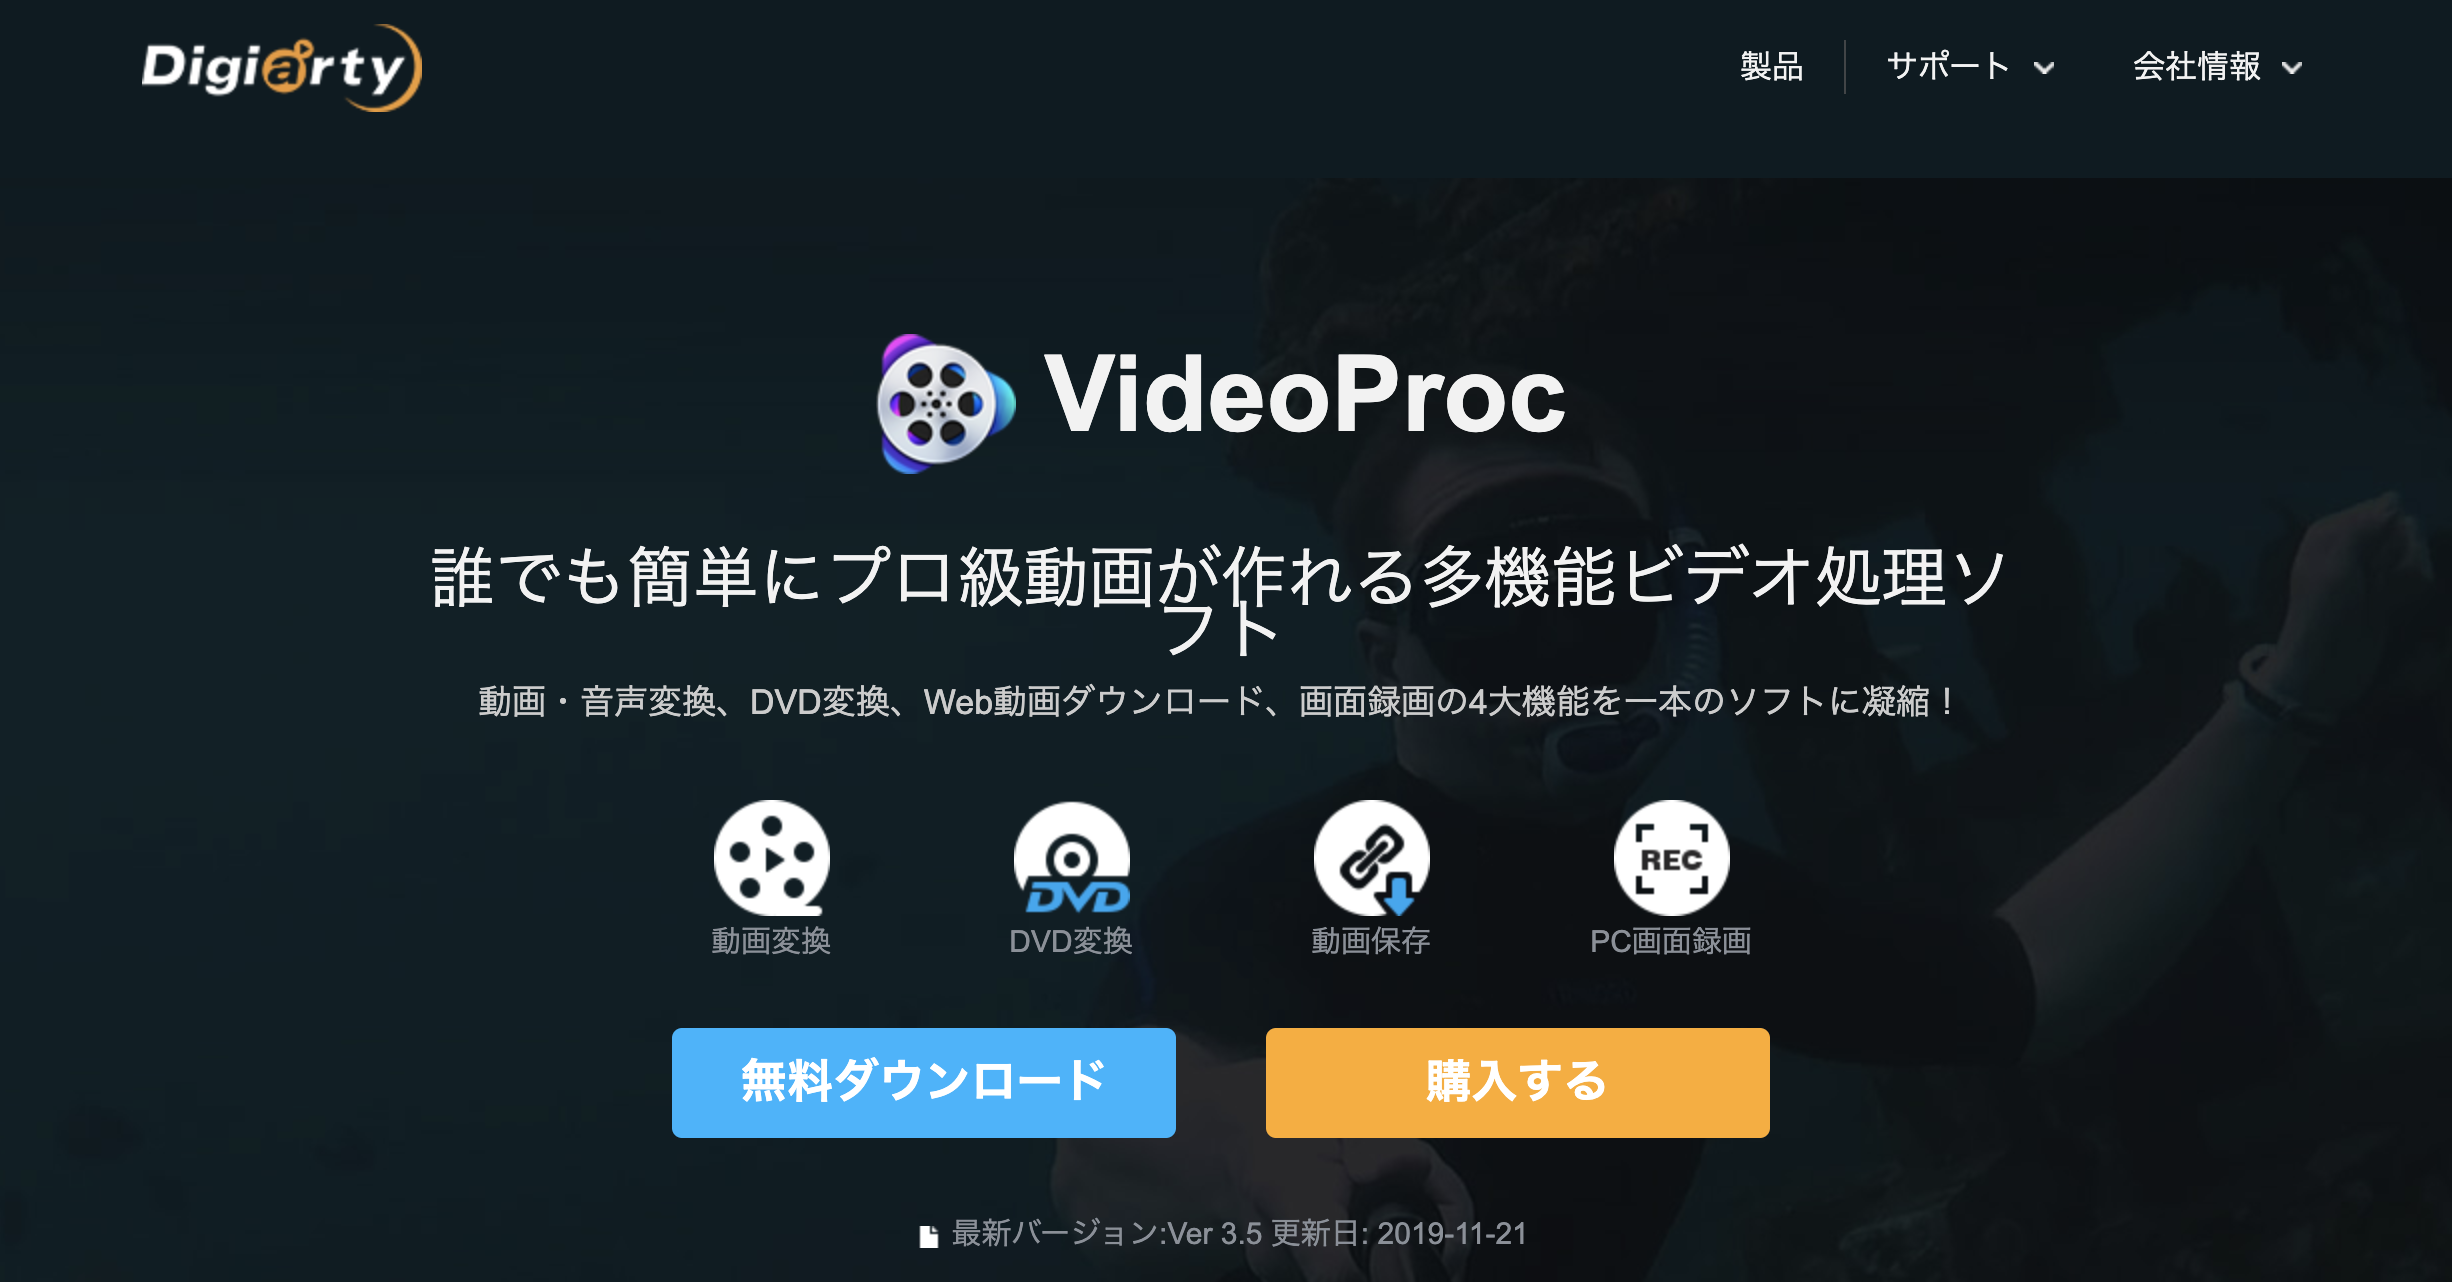 1.VideoProc